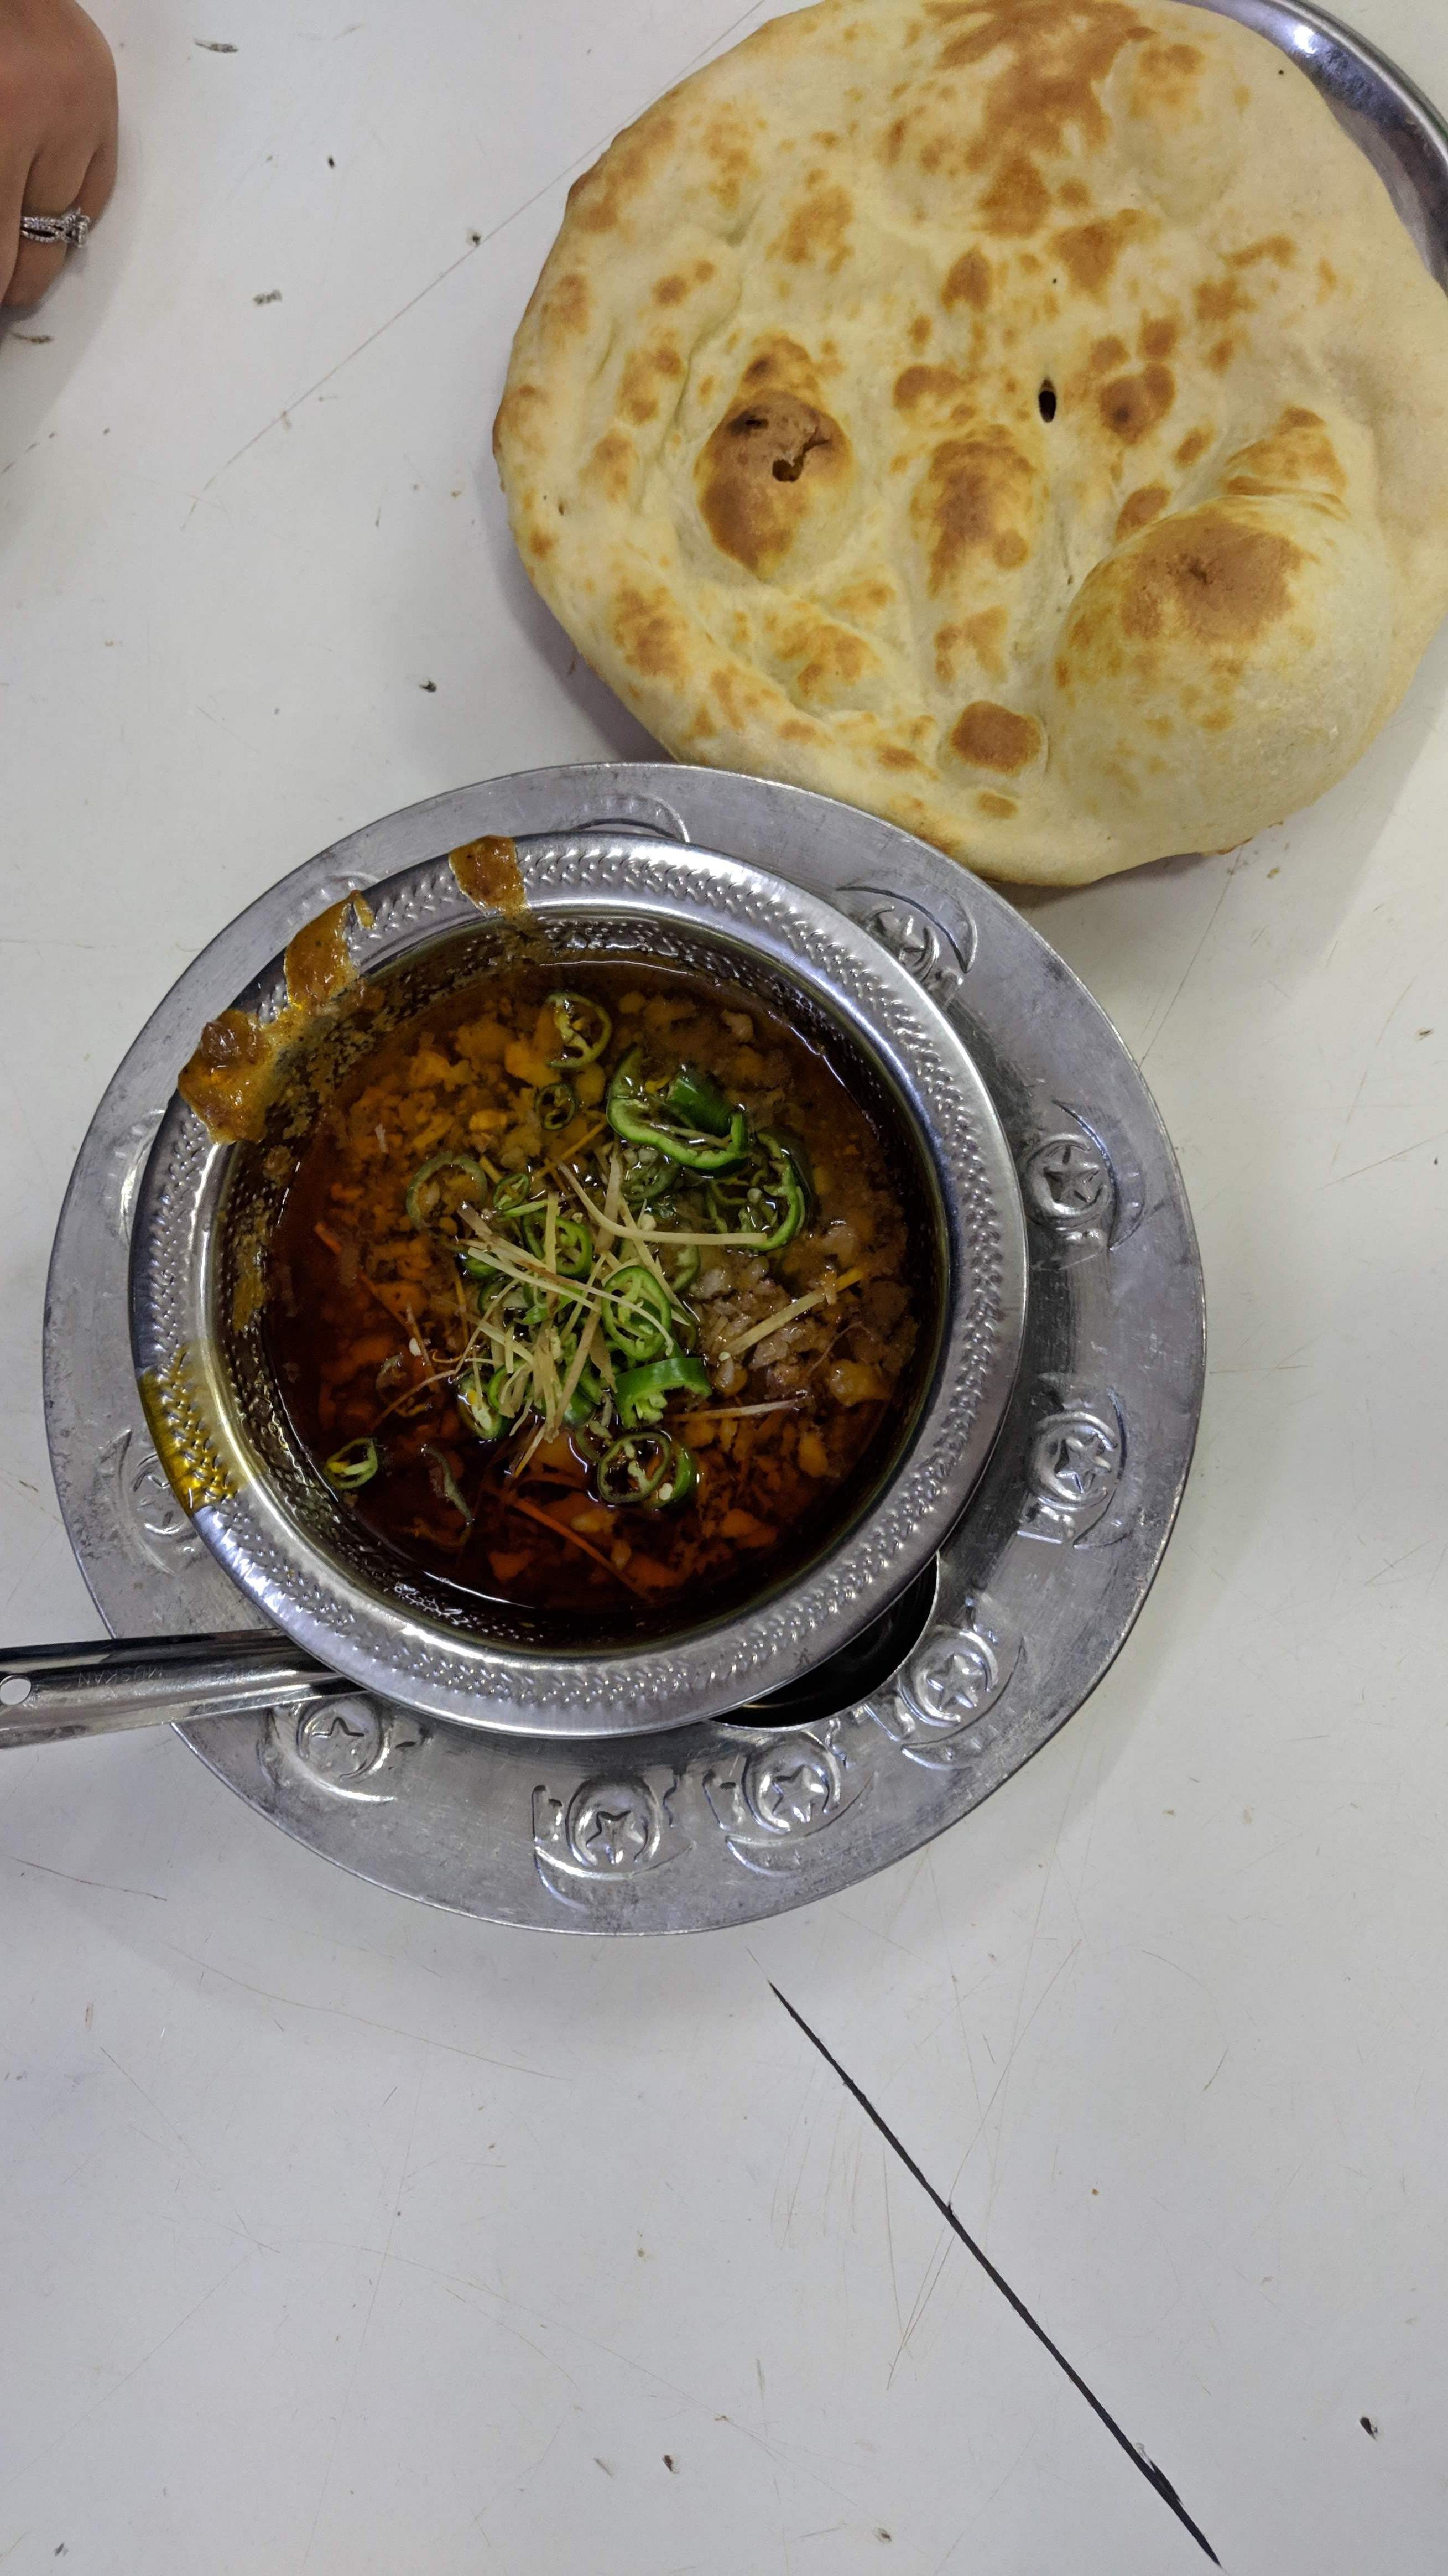 Dish,Food,Cuisine,Naan,Ingredient,Kulcha,Curry,Roti,Indian cuisine,Flatbread